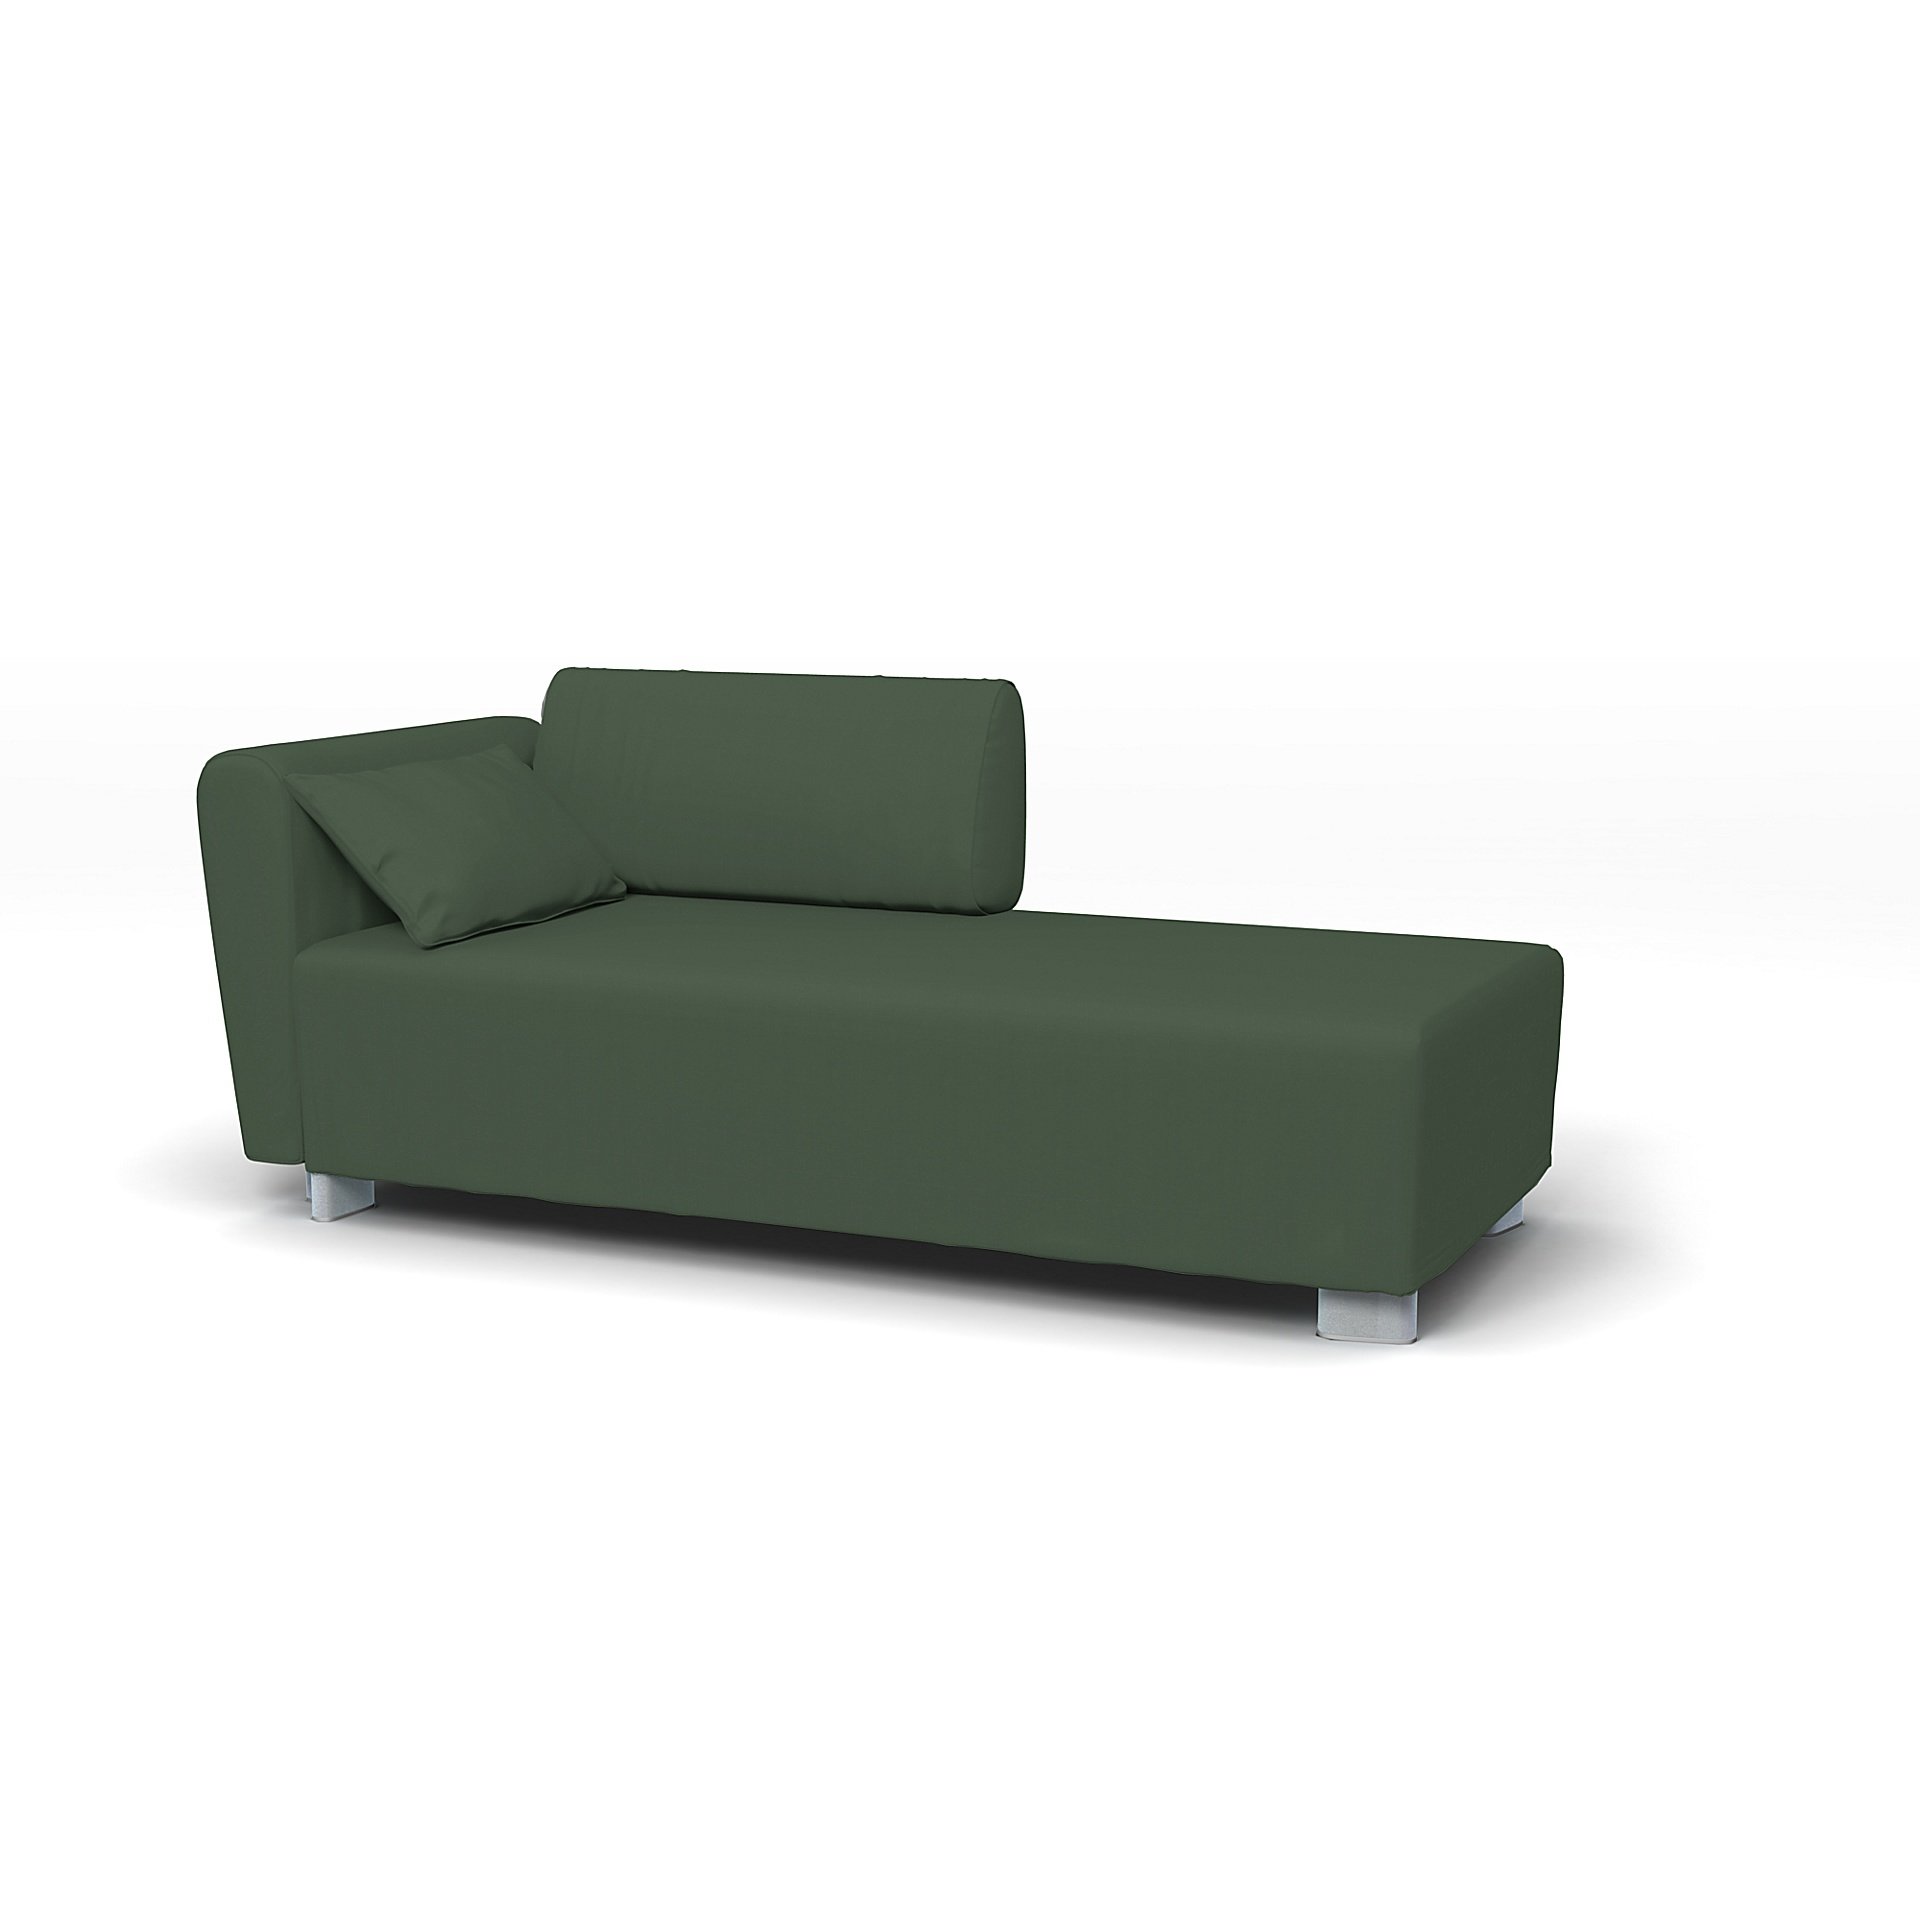 IKEA - Mysinge Chaise Longue with Armrest Cover, Thyme, Cotton - Bemz